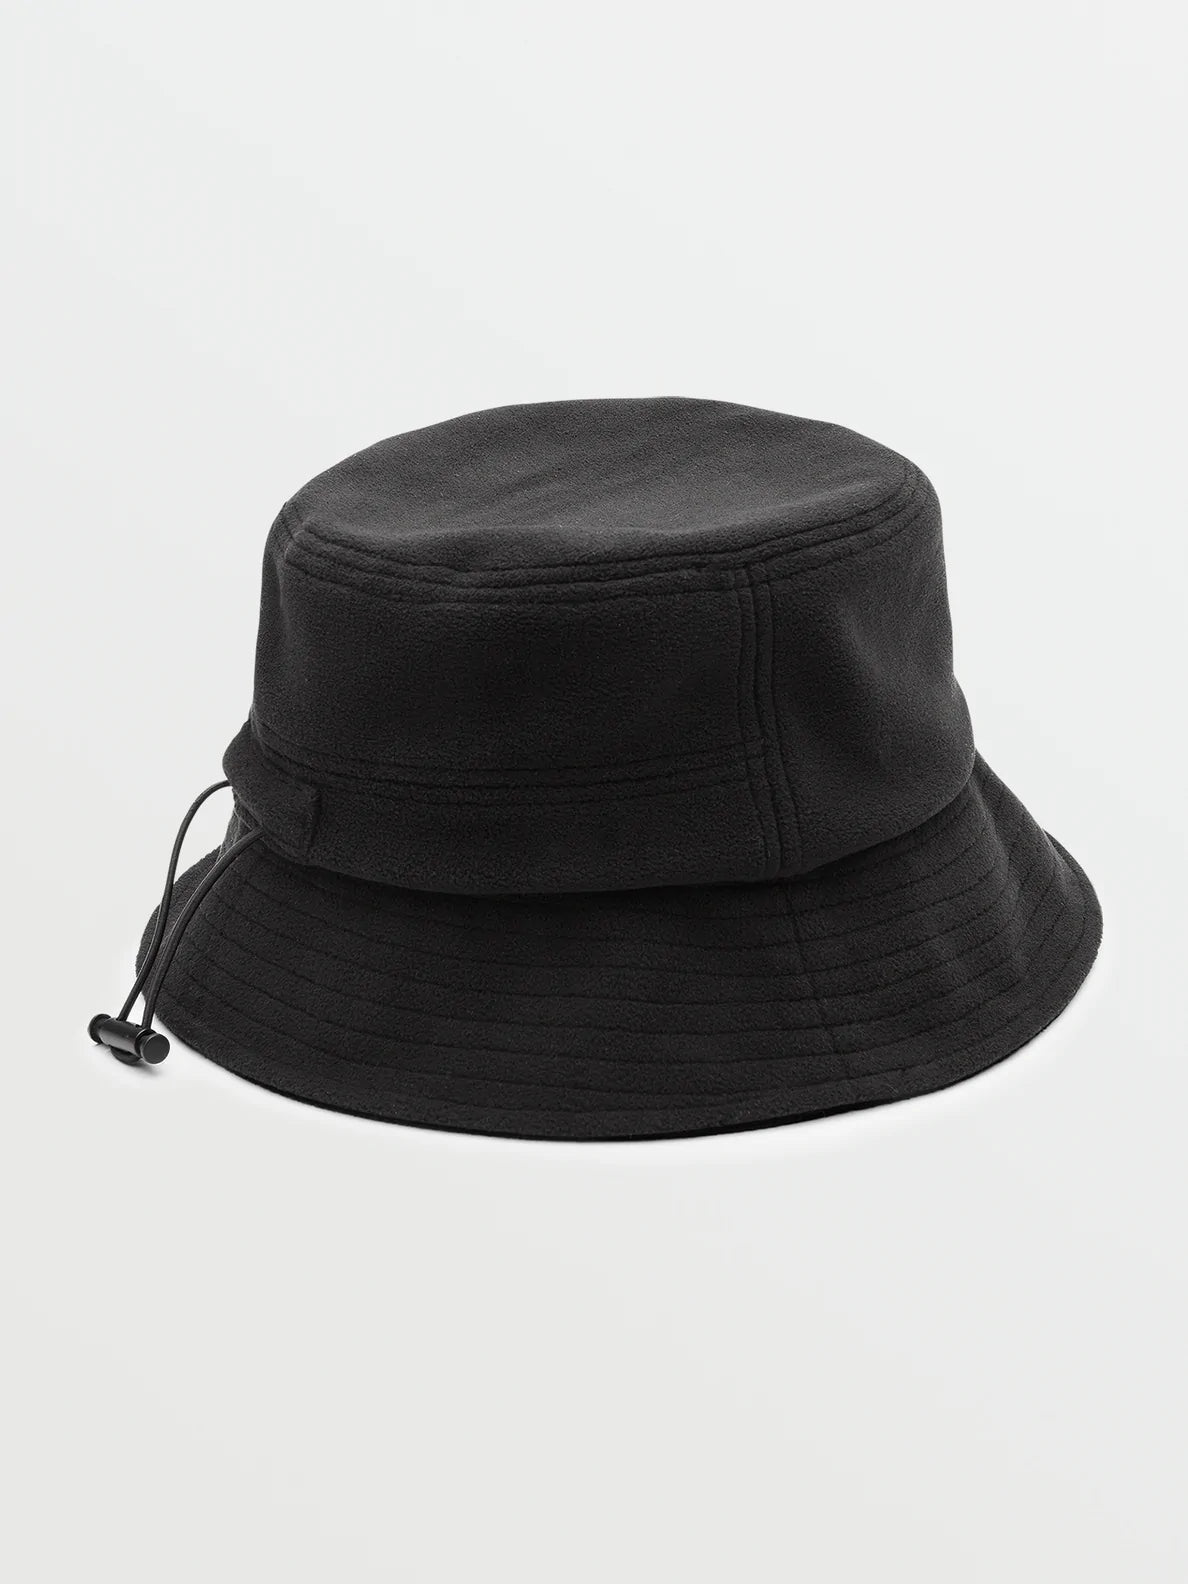 Volcom Men's Bucket Hat, Black, Size S/M